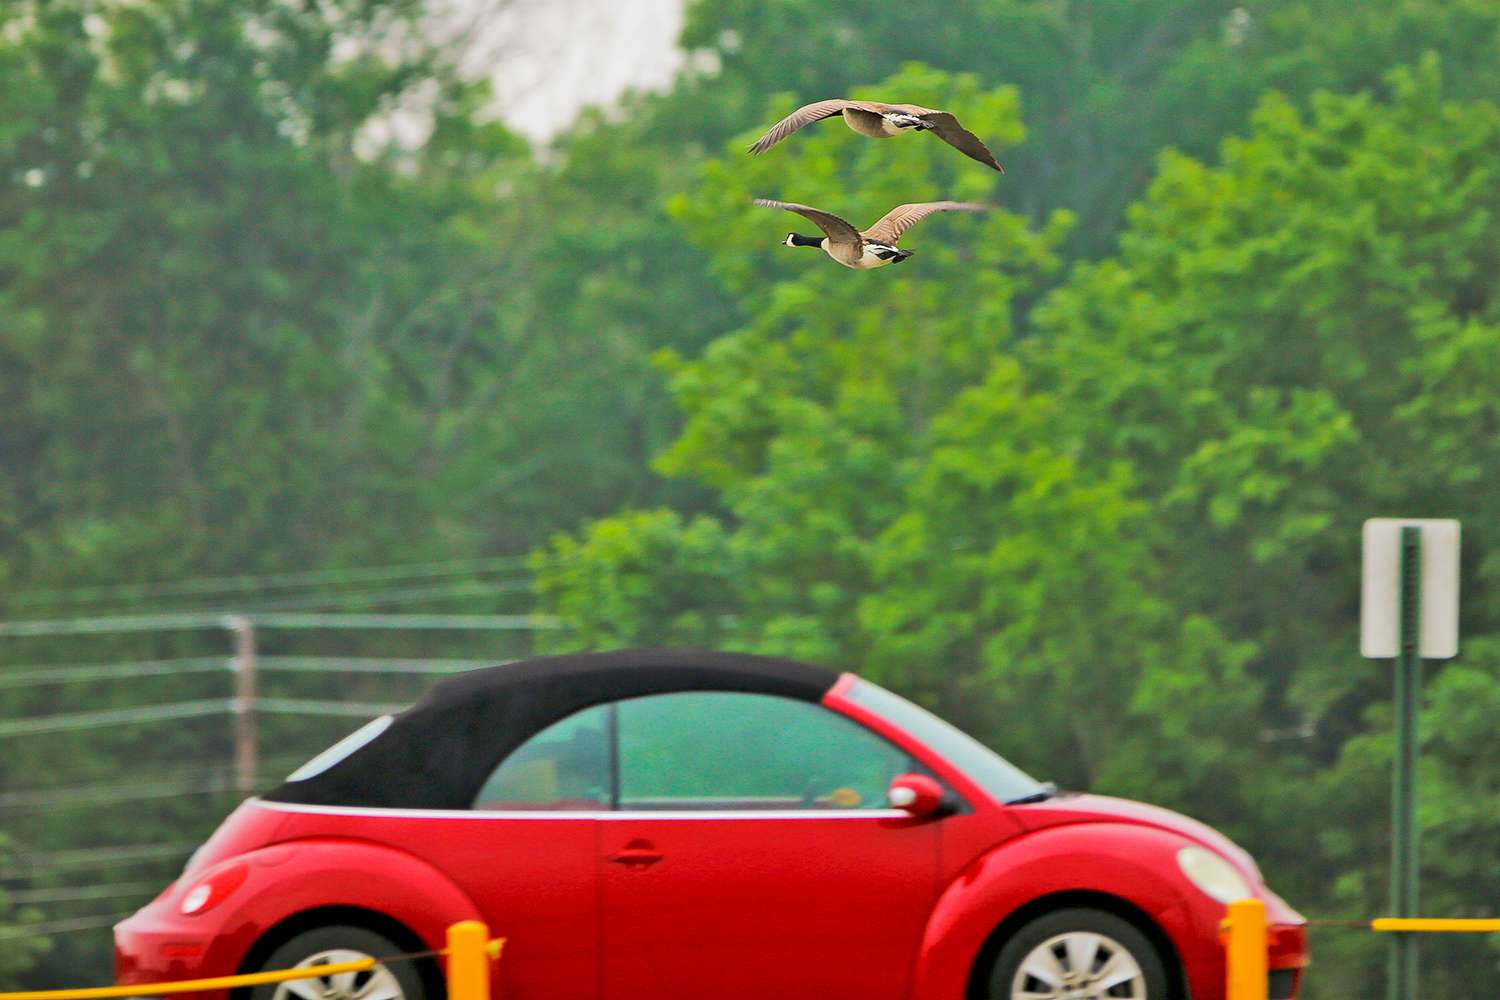 Canada geese buzzing a VW bug. Ross Barnett Bassmaster Elite 2017.